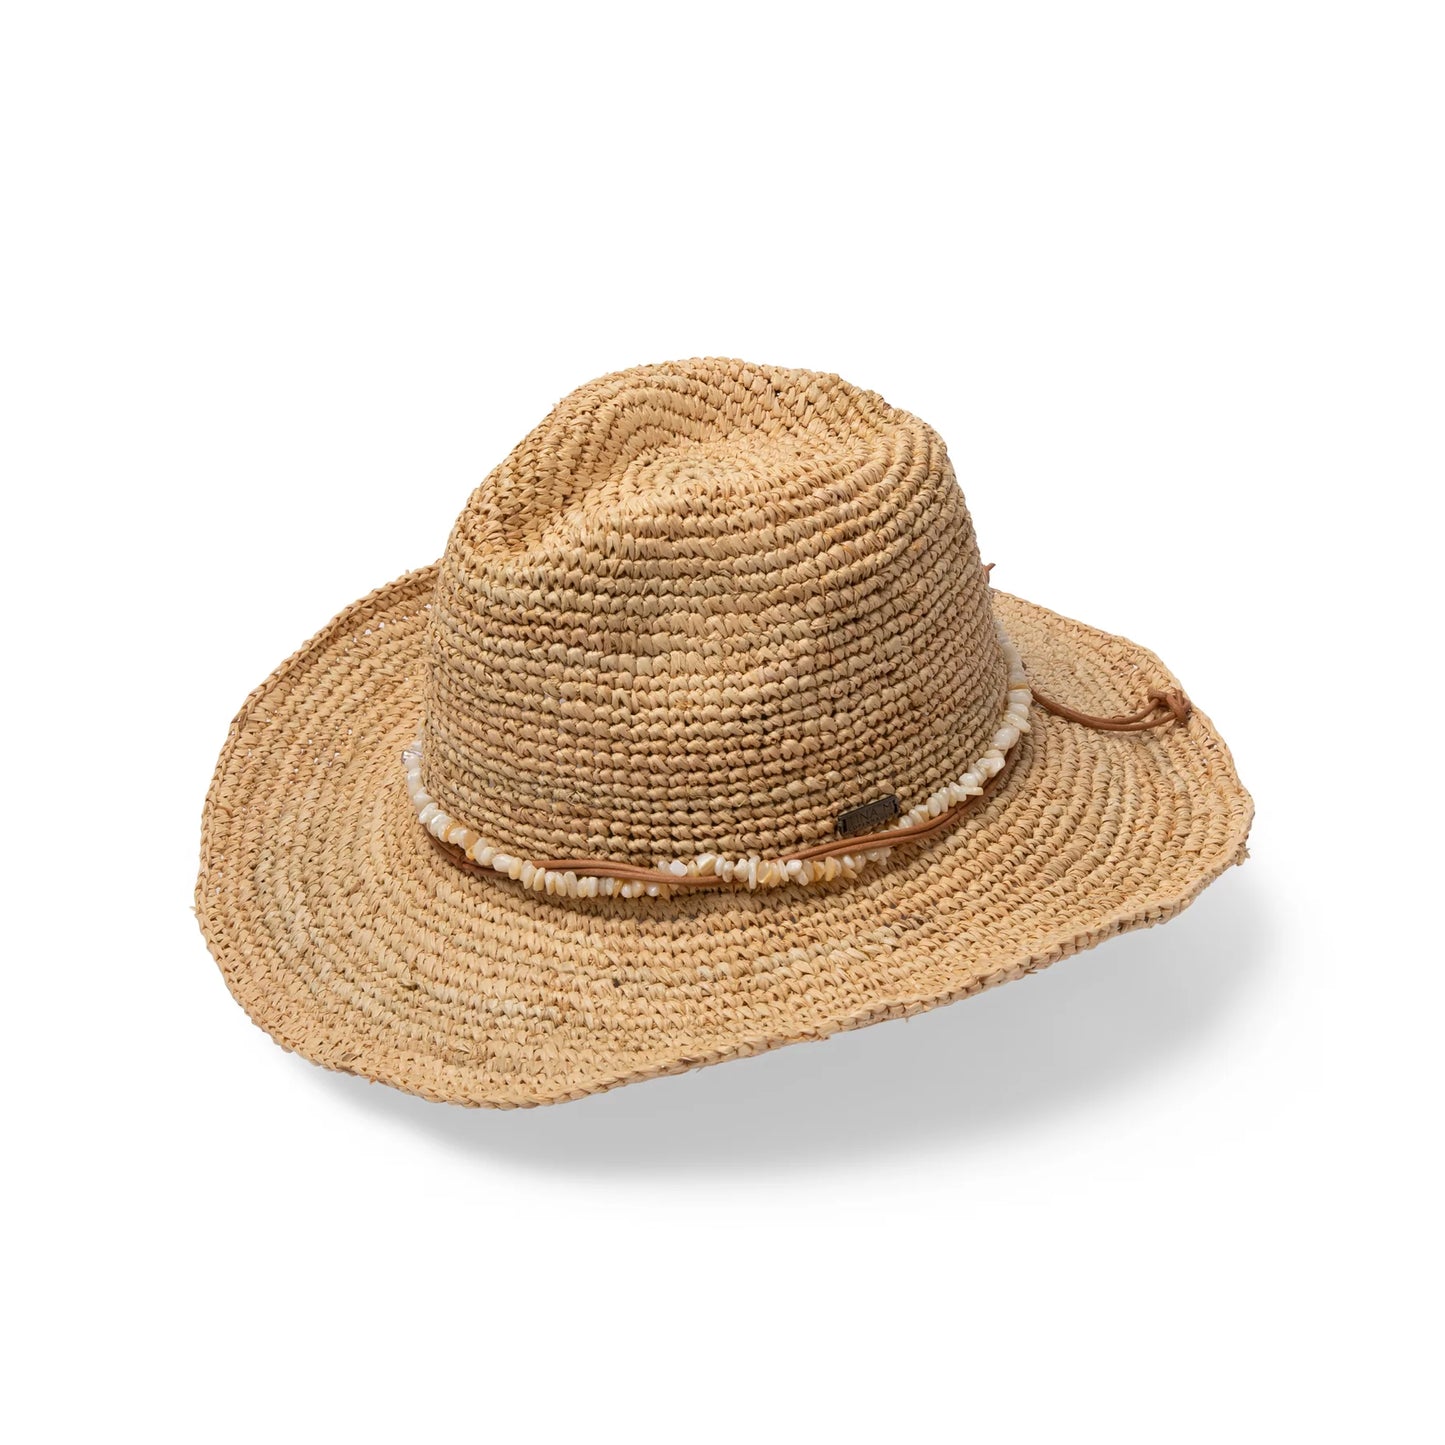 Tina M Cowboy Hat Natural